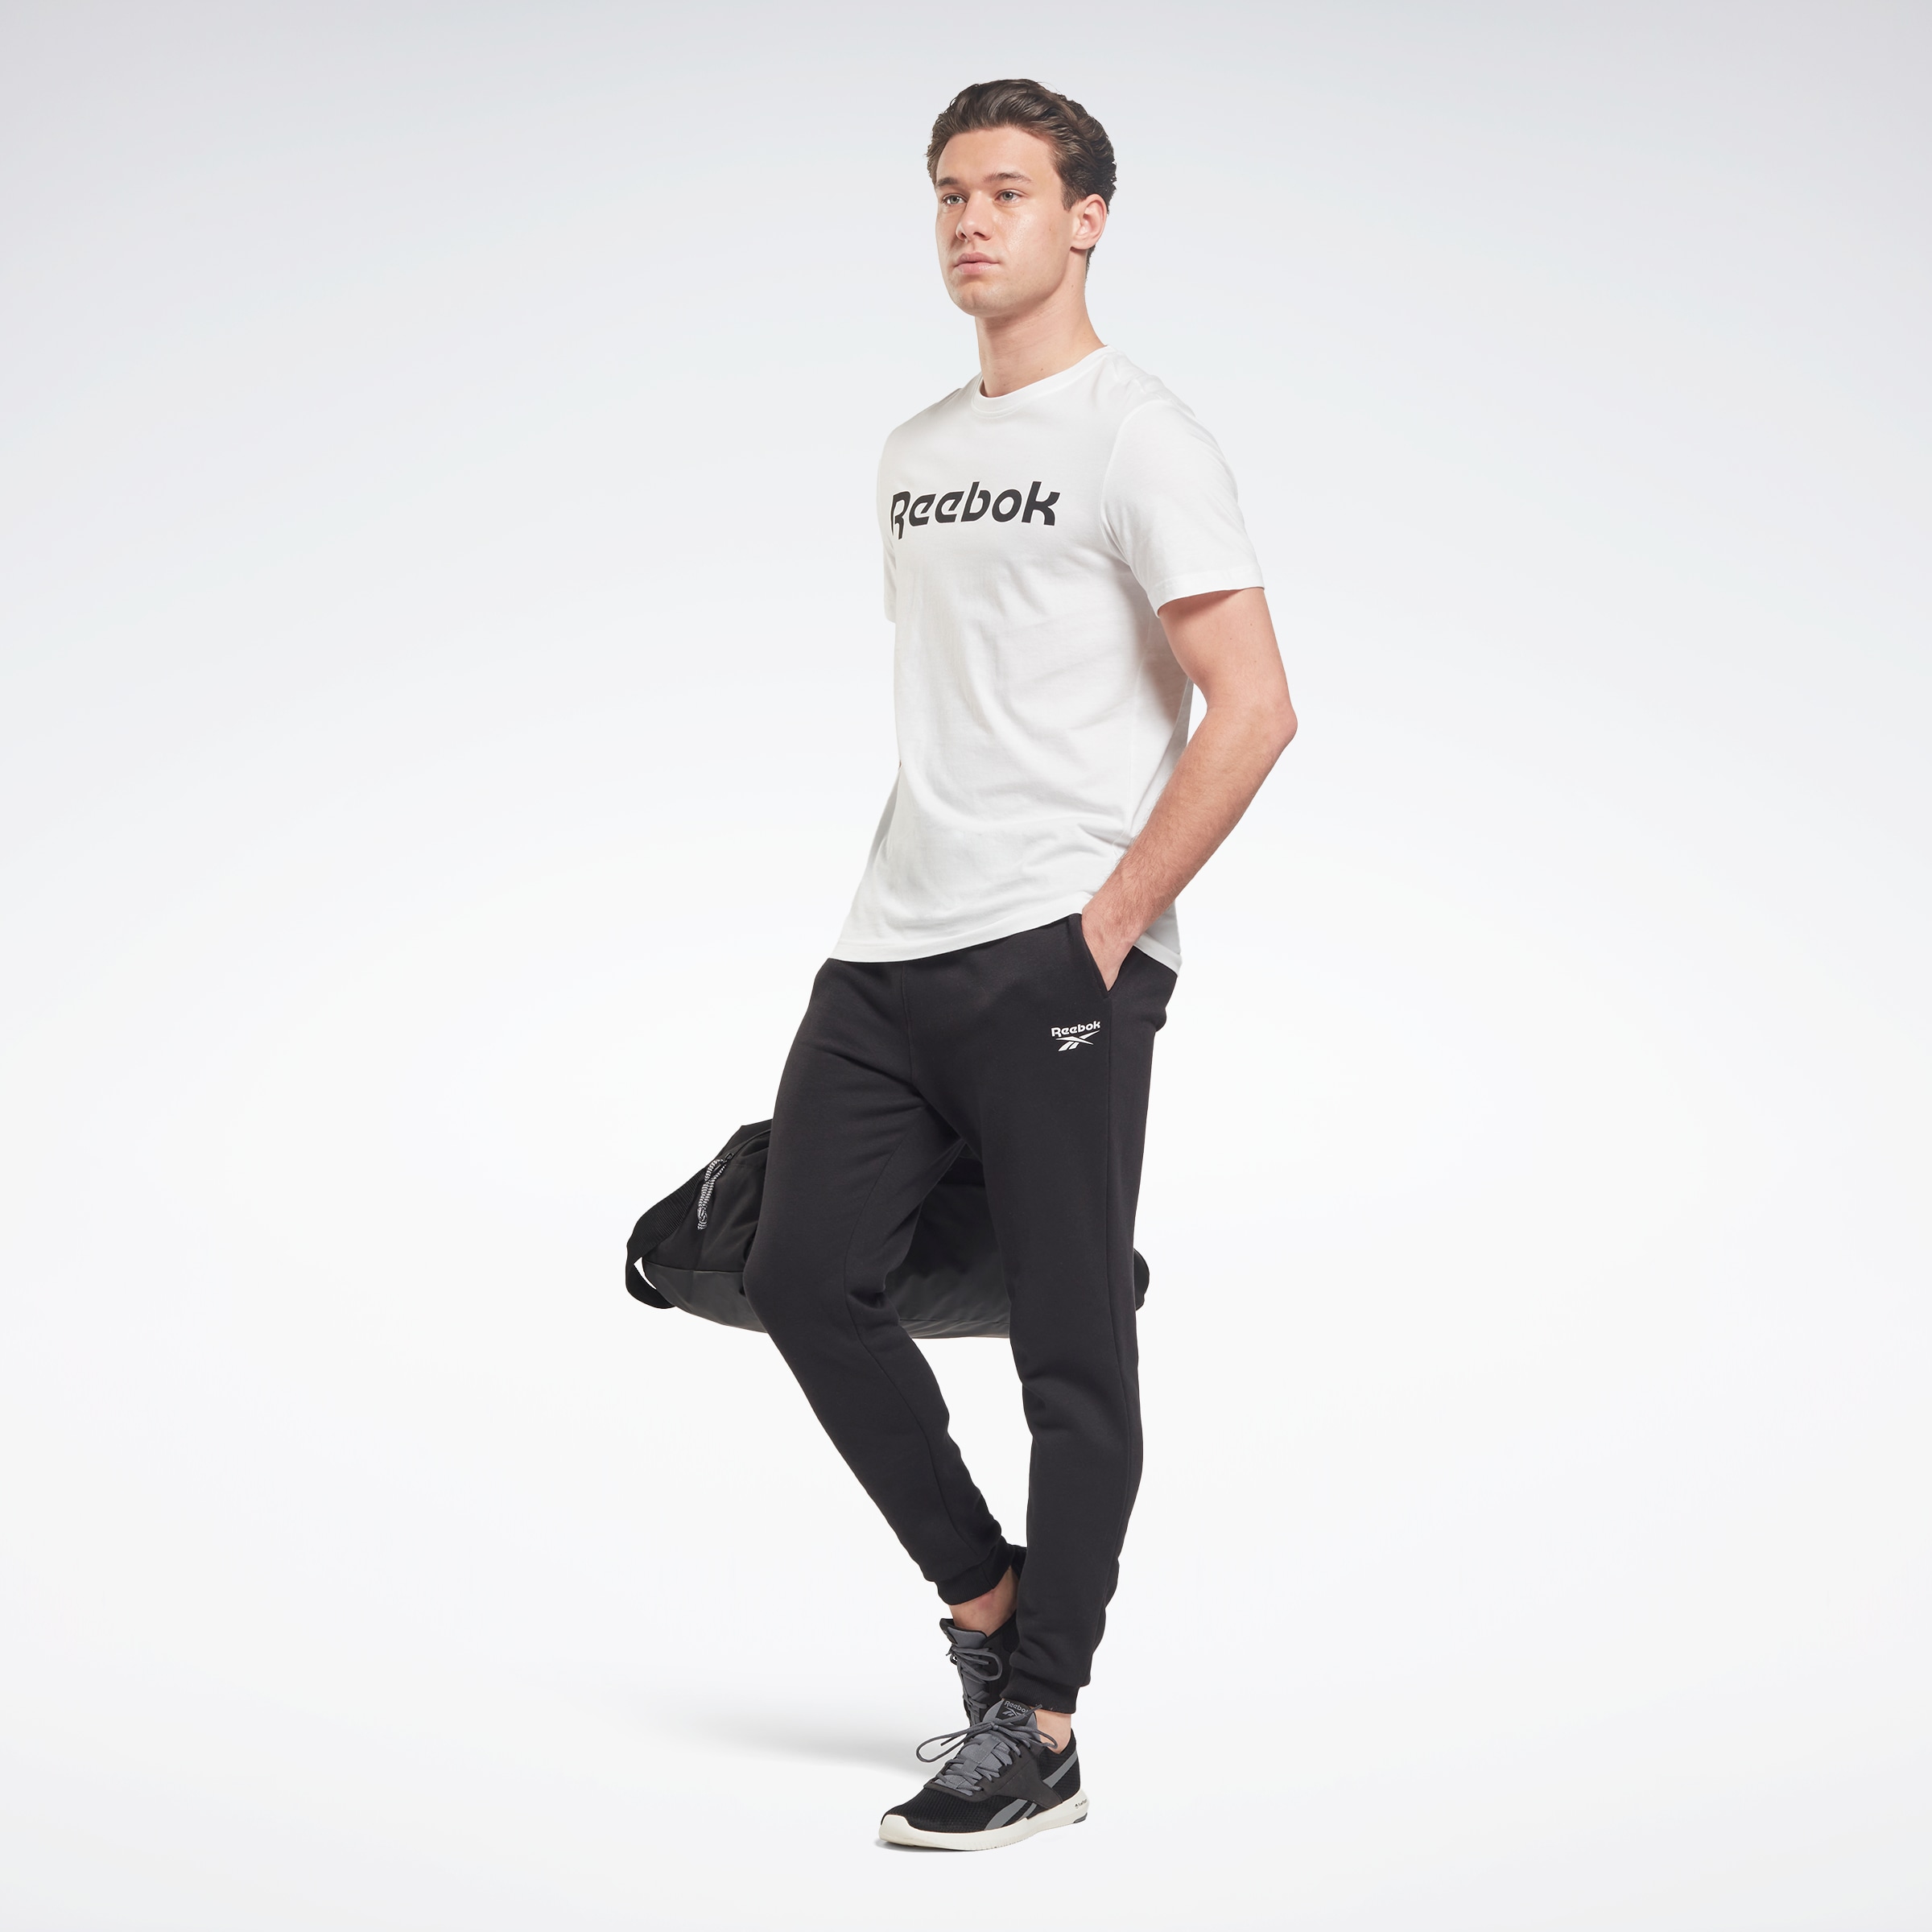 Reebok Sporthose OTTO Leg »RI Jogger« Left bestellen bei online